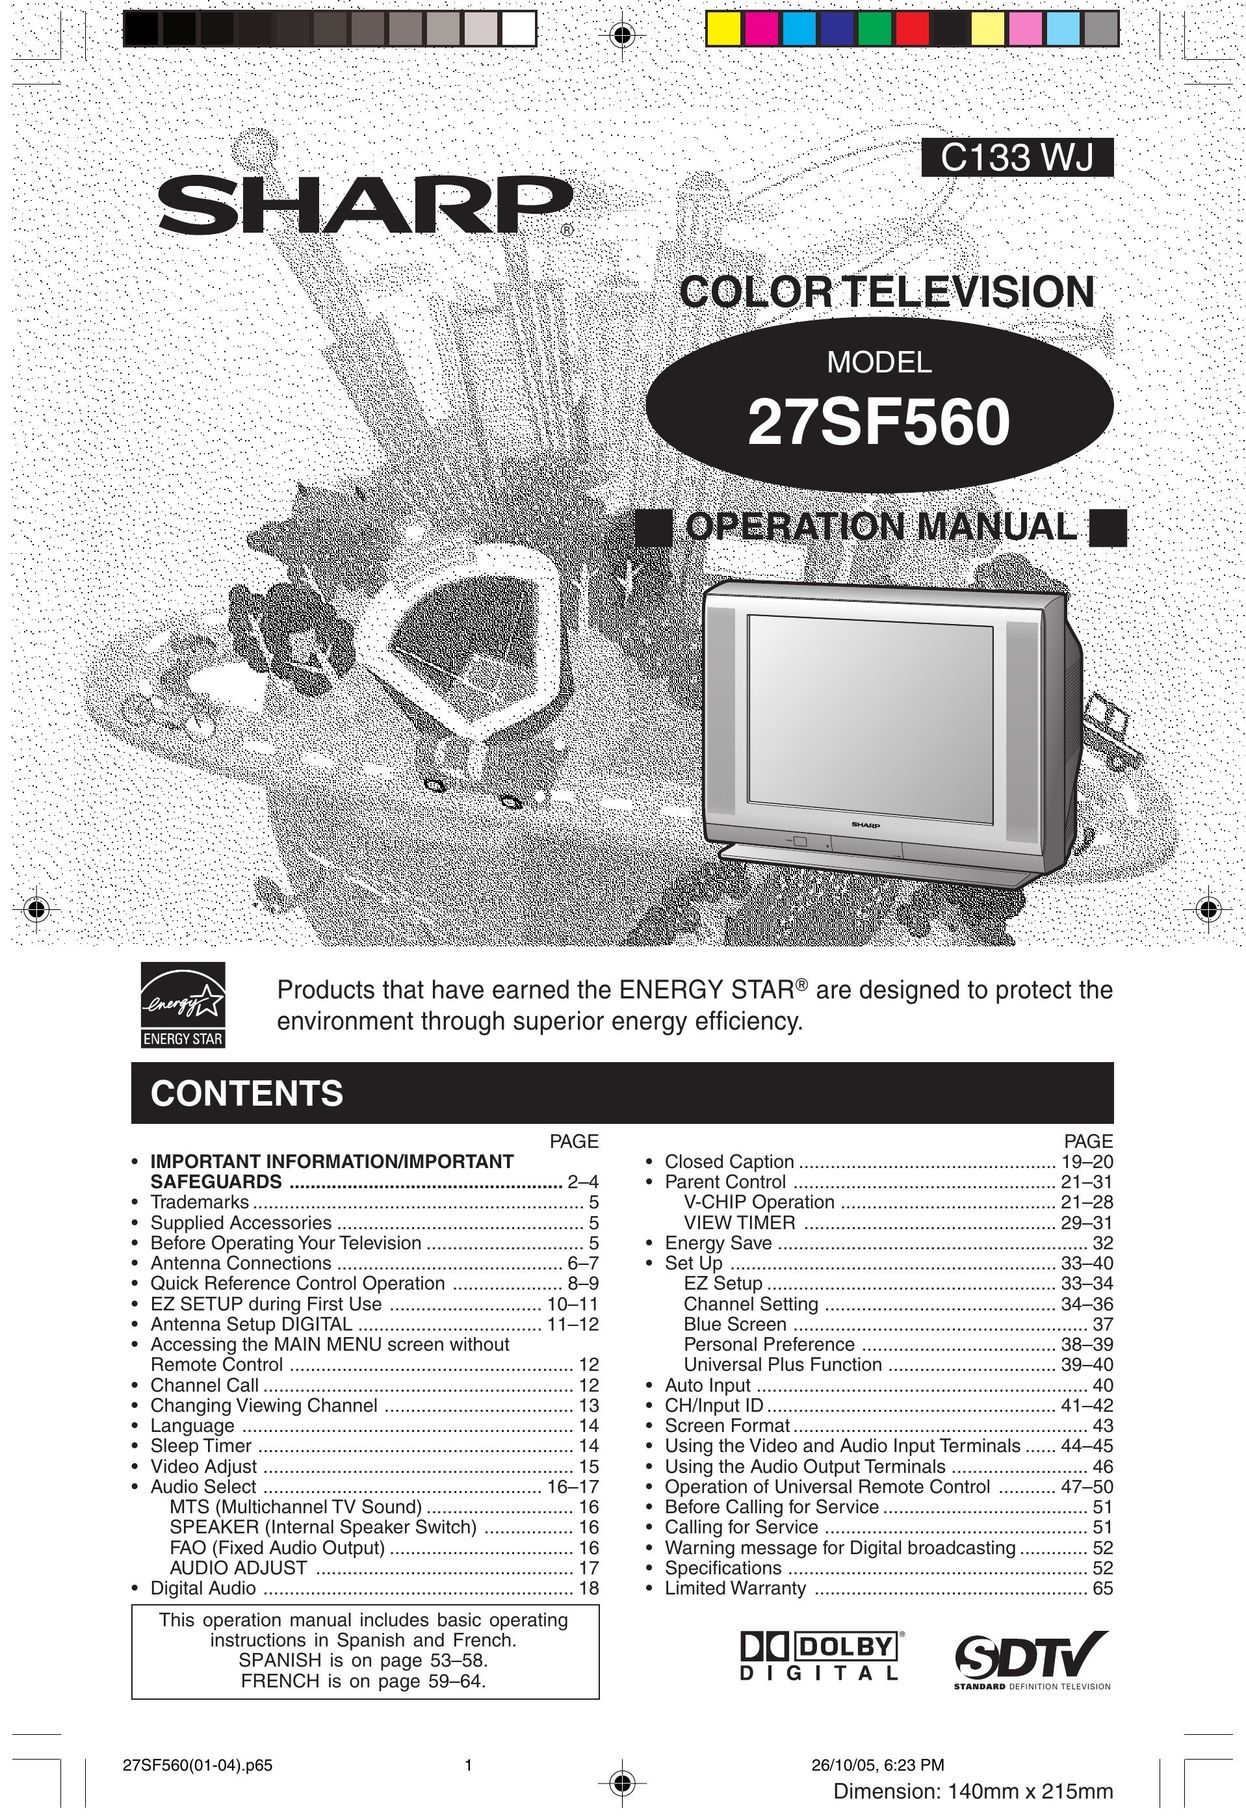 Sharp 27SF560 CRT Television User Manual